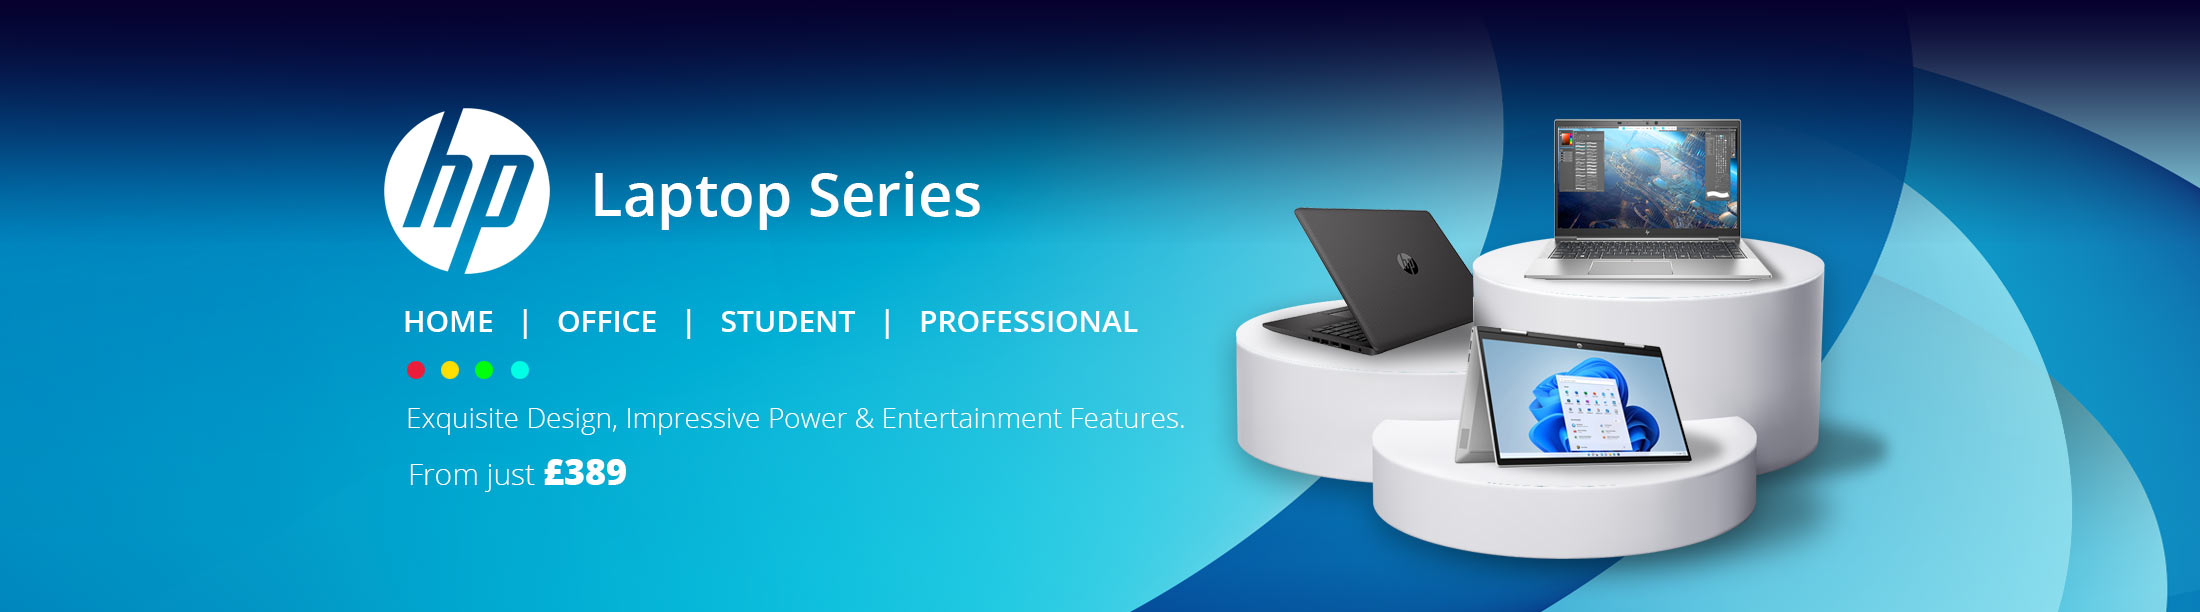 HP Laptop Series- Exquisite Design, Impressive Power & Entertainment Features